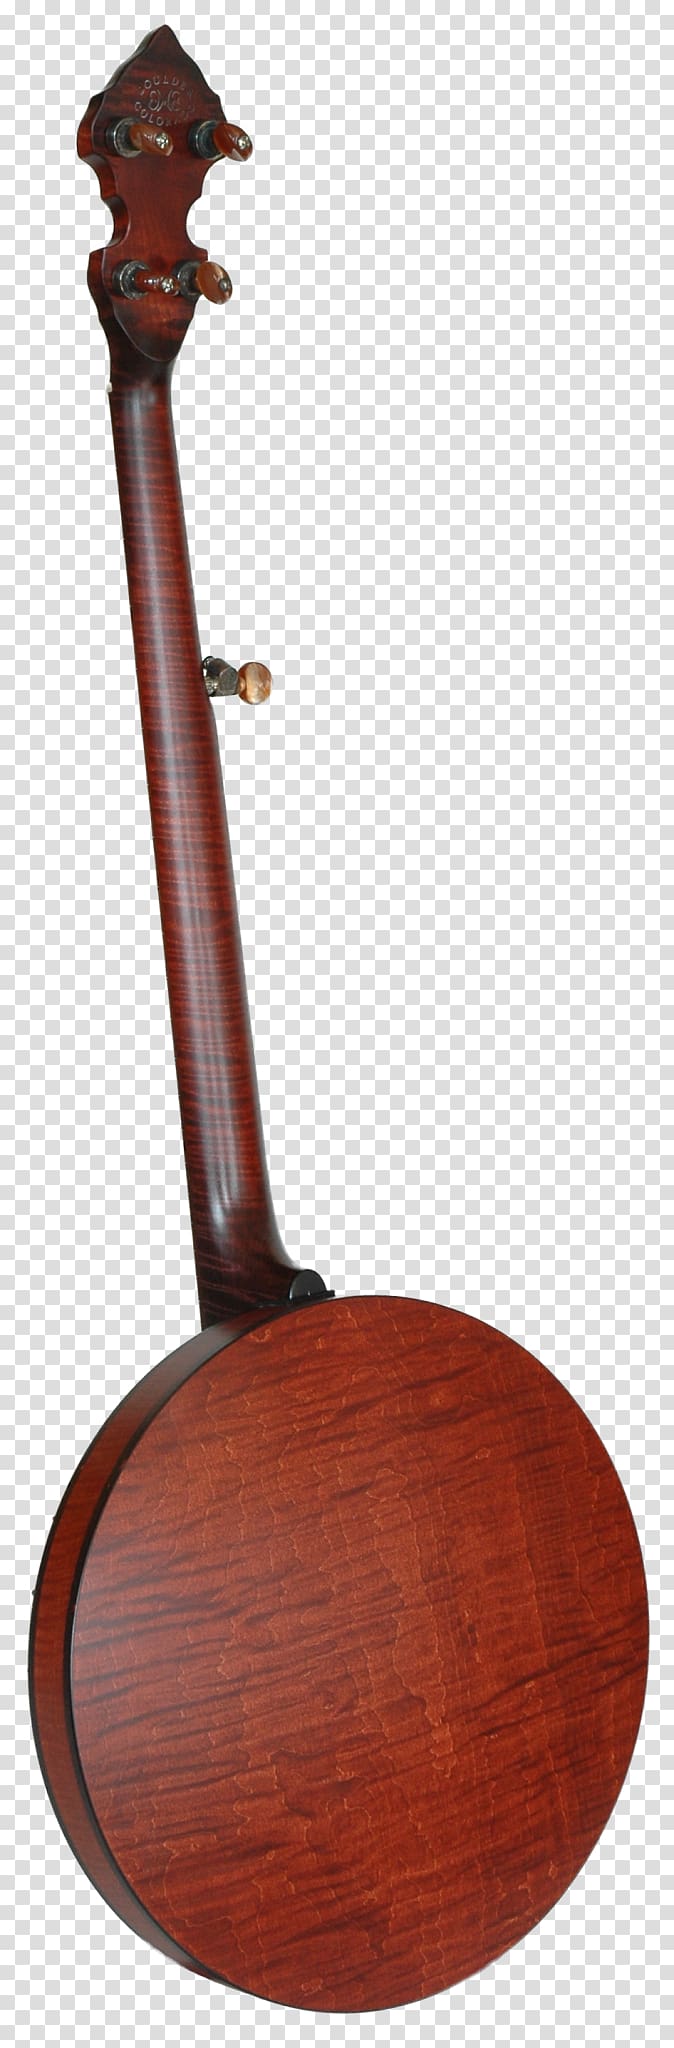 Tanbur Musical Instruments String Instruments Plucked string instrument Banjo, musical instruments transparent background PNG clipart